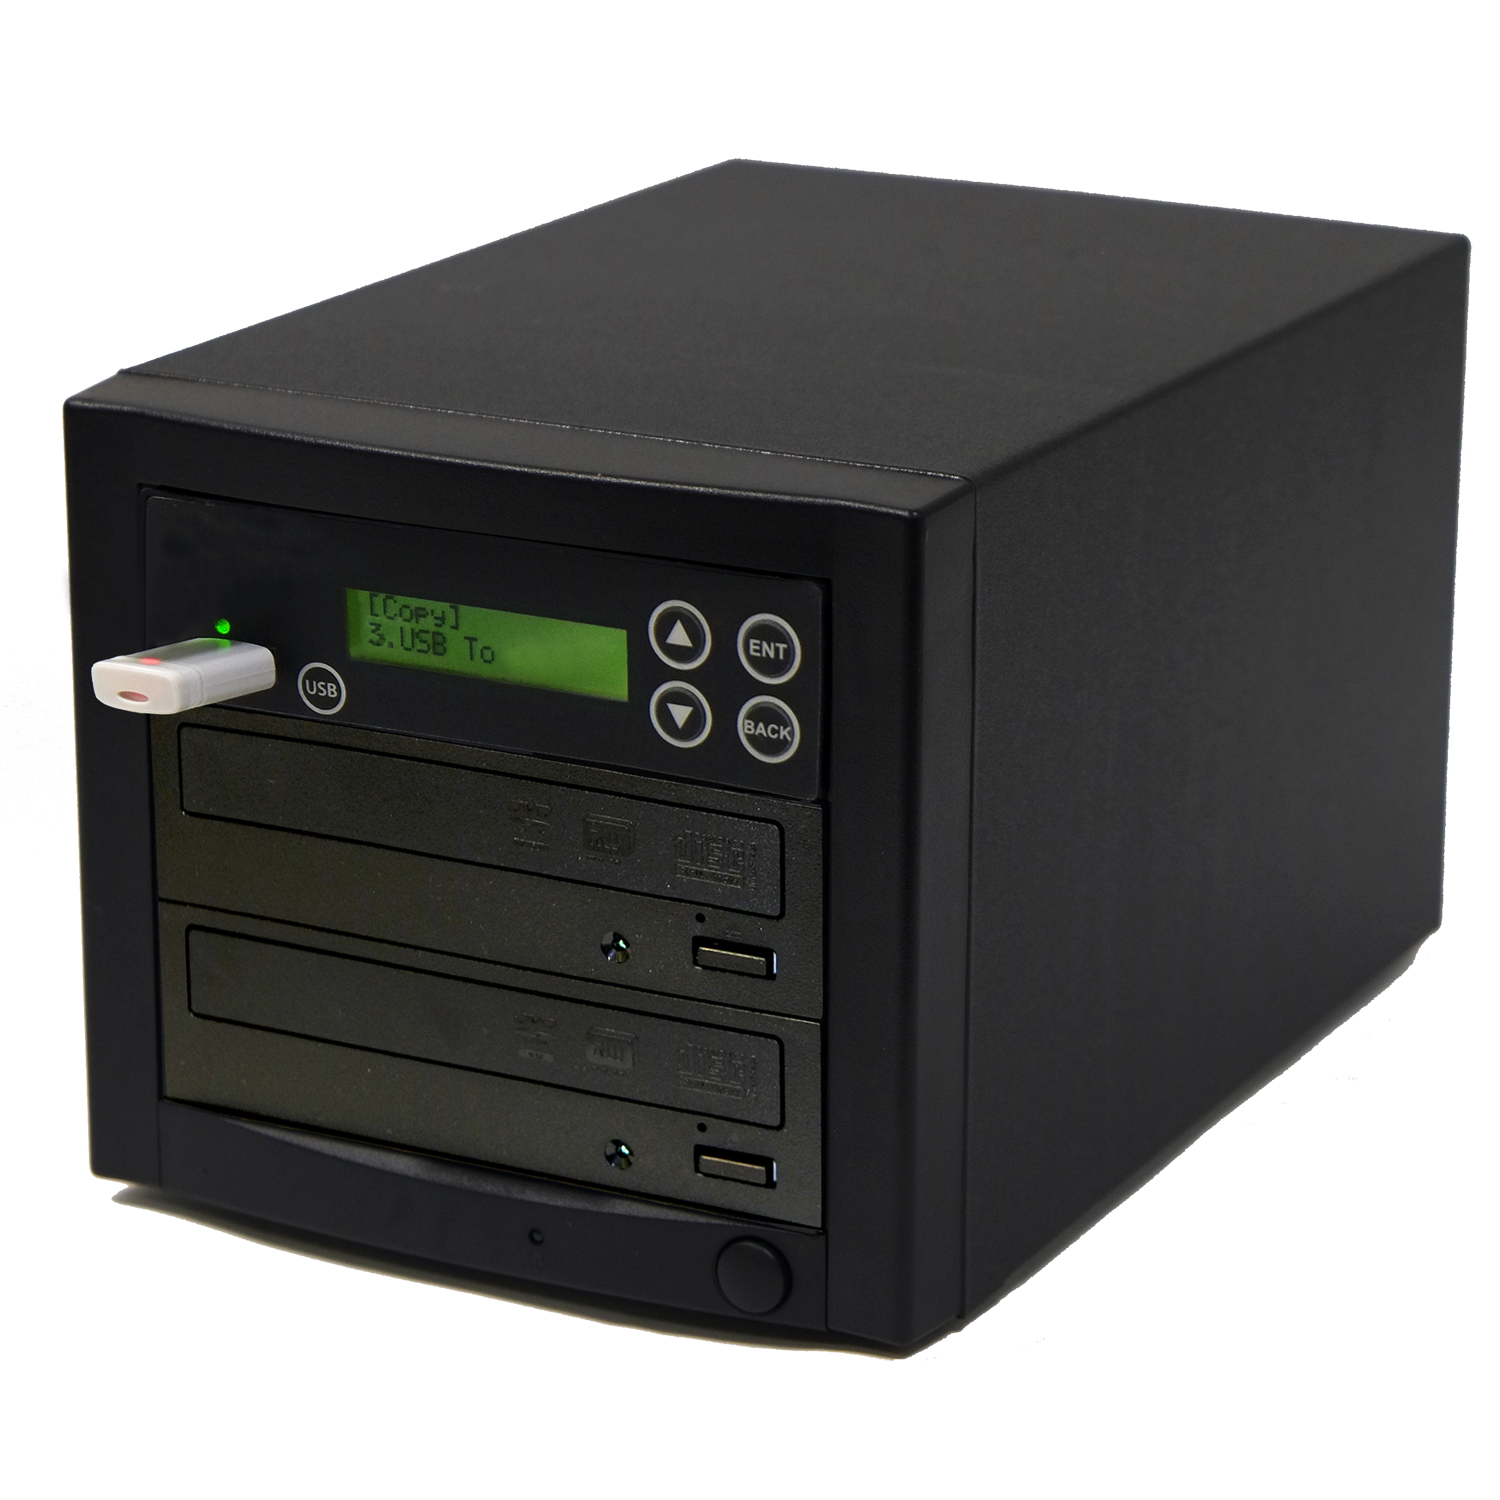 EZ Dupe Media Maven Duplicator - USB & Disc to 1 CD/DVD Copier (D901-SSP)